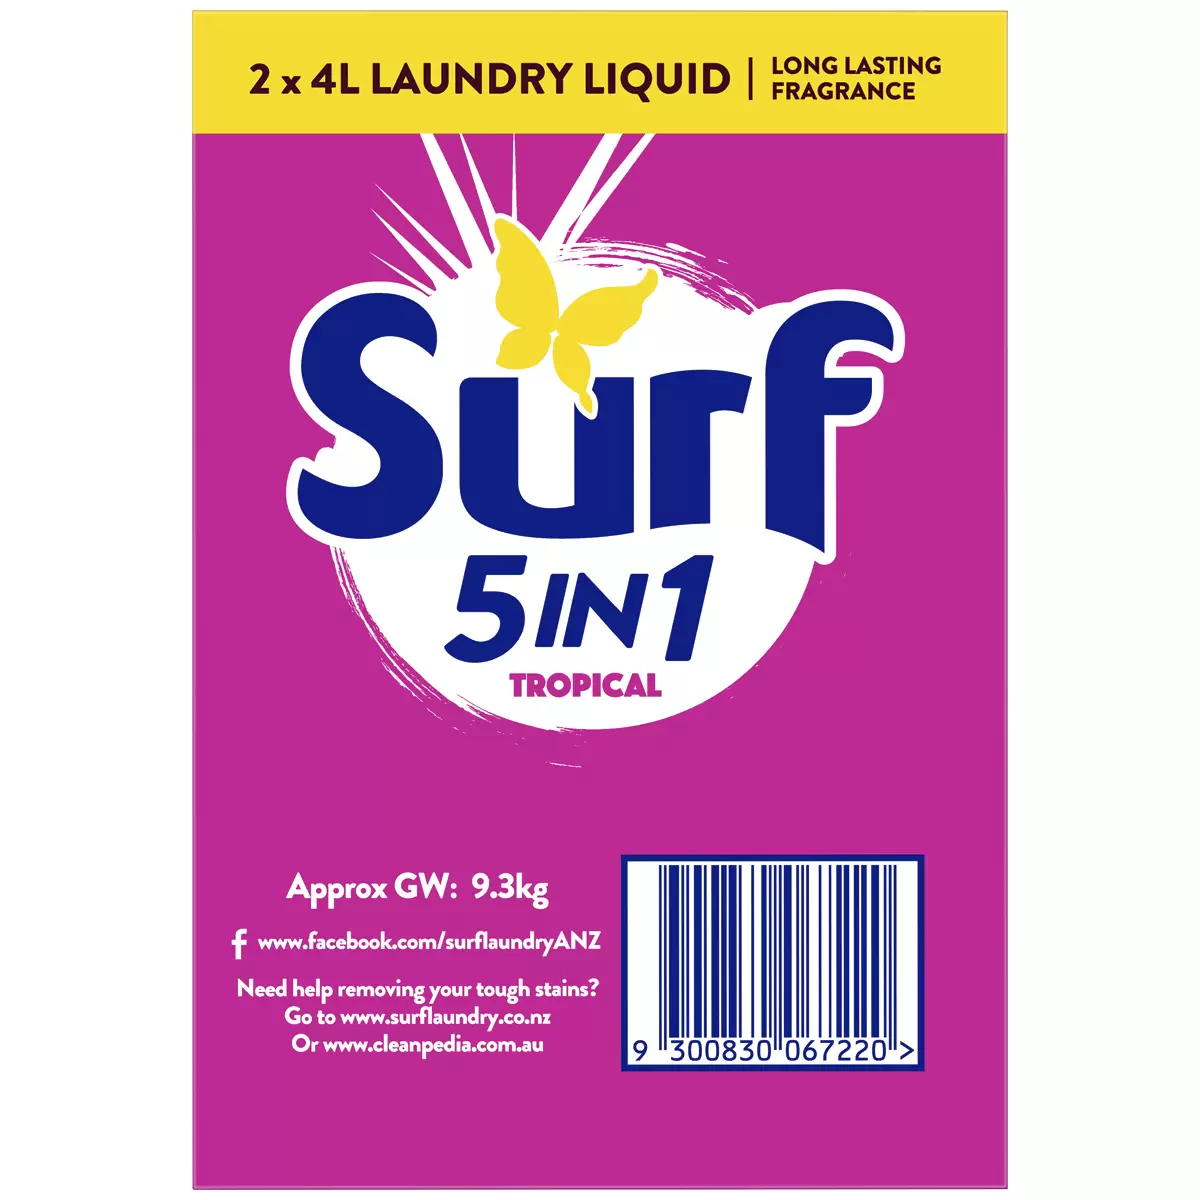 Surf Tropical Laundry Liquid 2 x 4L